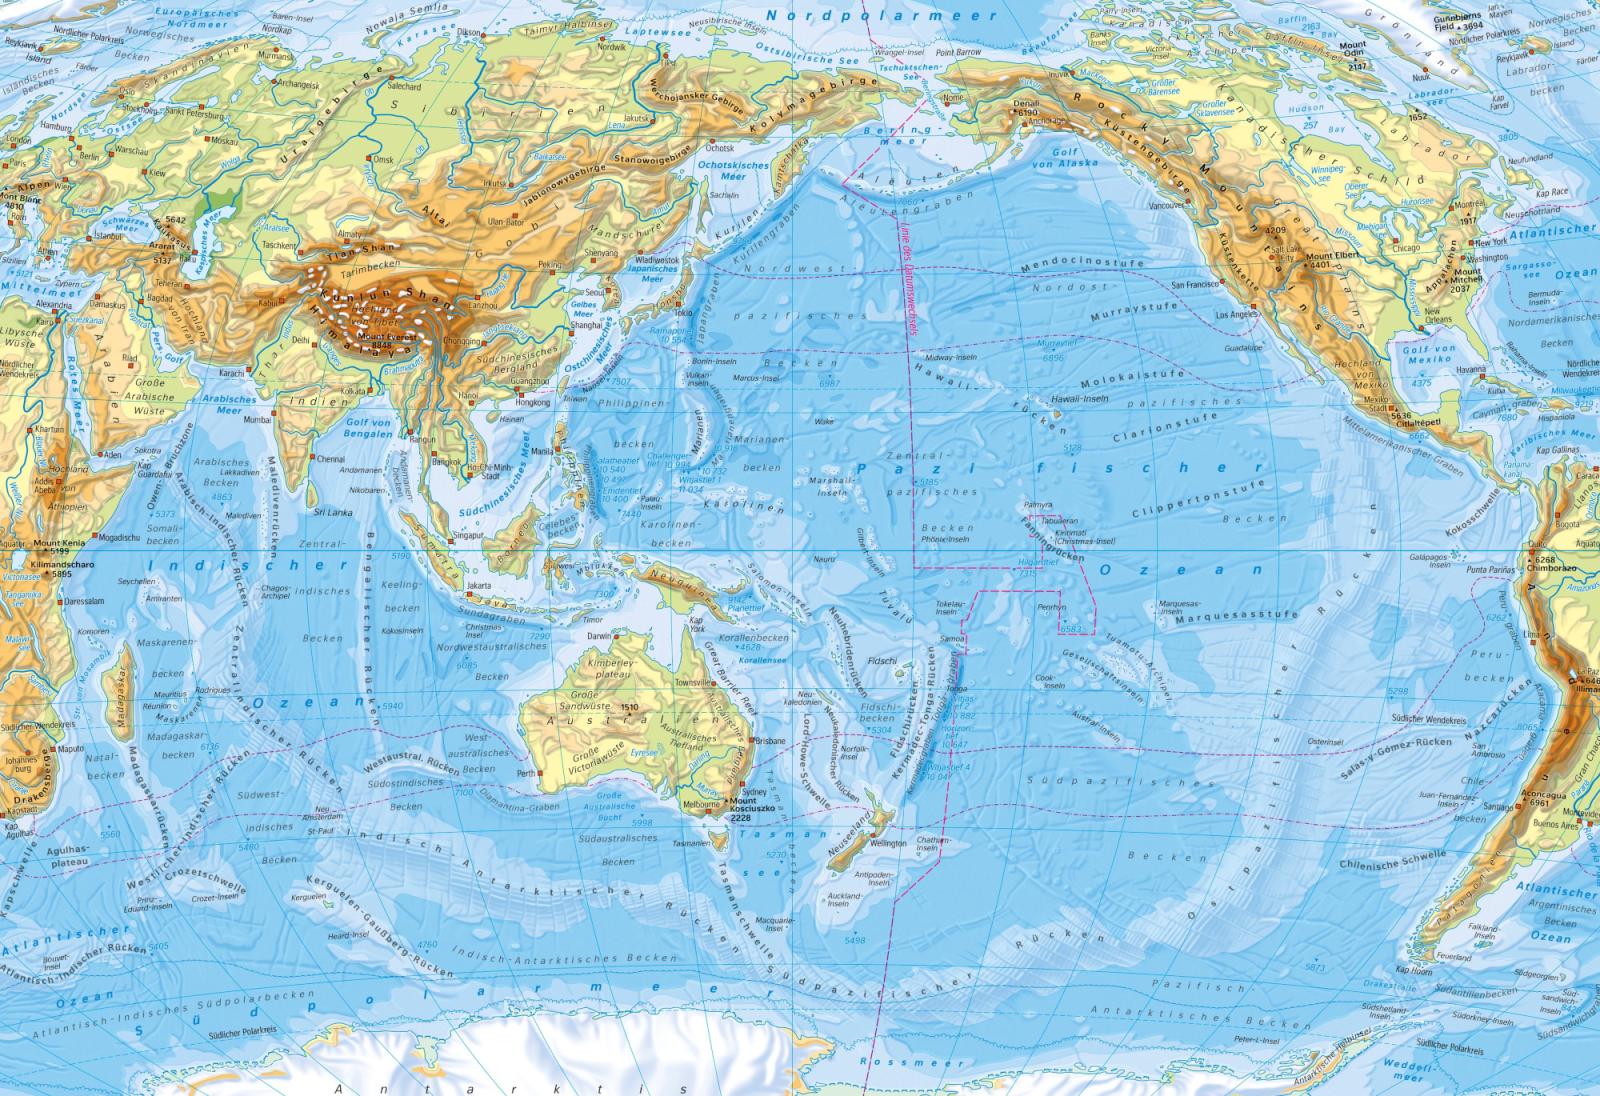 Восточная часть тихого океана. Тихий океан на карте. Острова Тихого океана на карте. Карта Тихого океана географическая. Т̊и̊х̊и̊й̊ о̊к̊е̊а̊н̊ н̊а̊ к̊а̊р̊р̊ т̊т̊е̊.